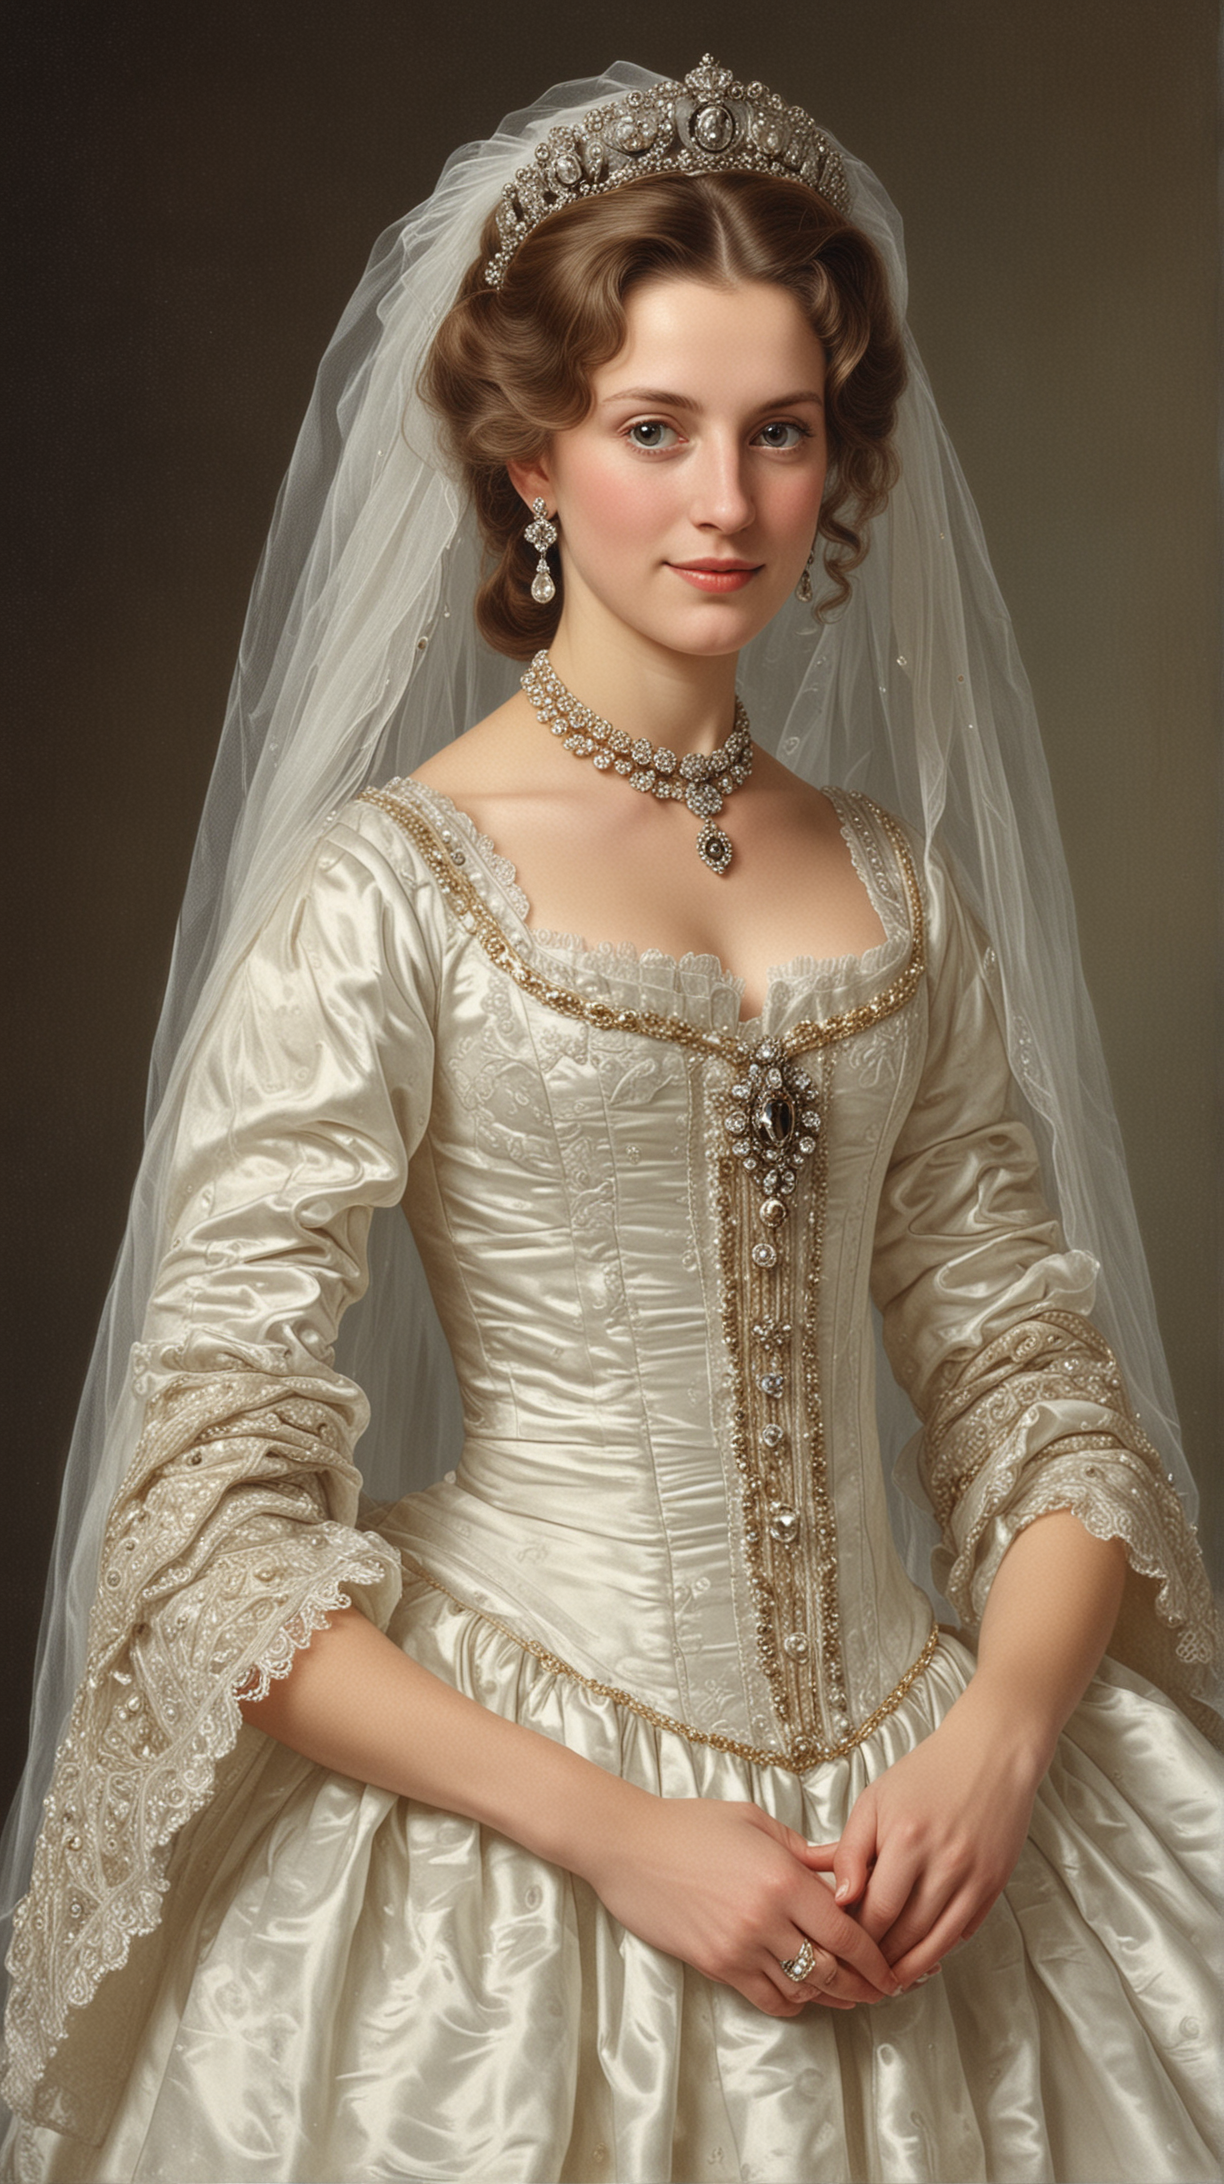 Archduchess MarieLouise of Austria Portrait